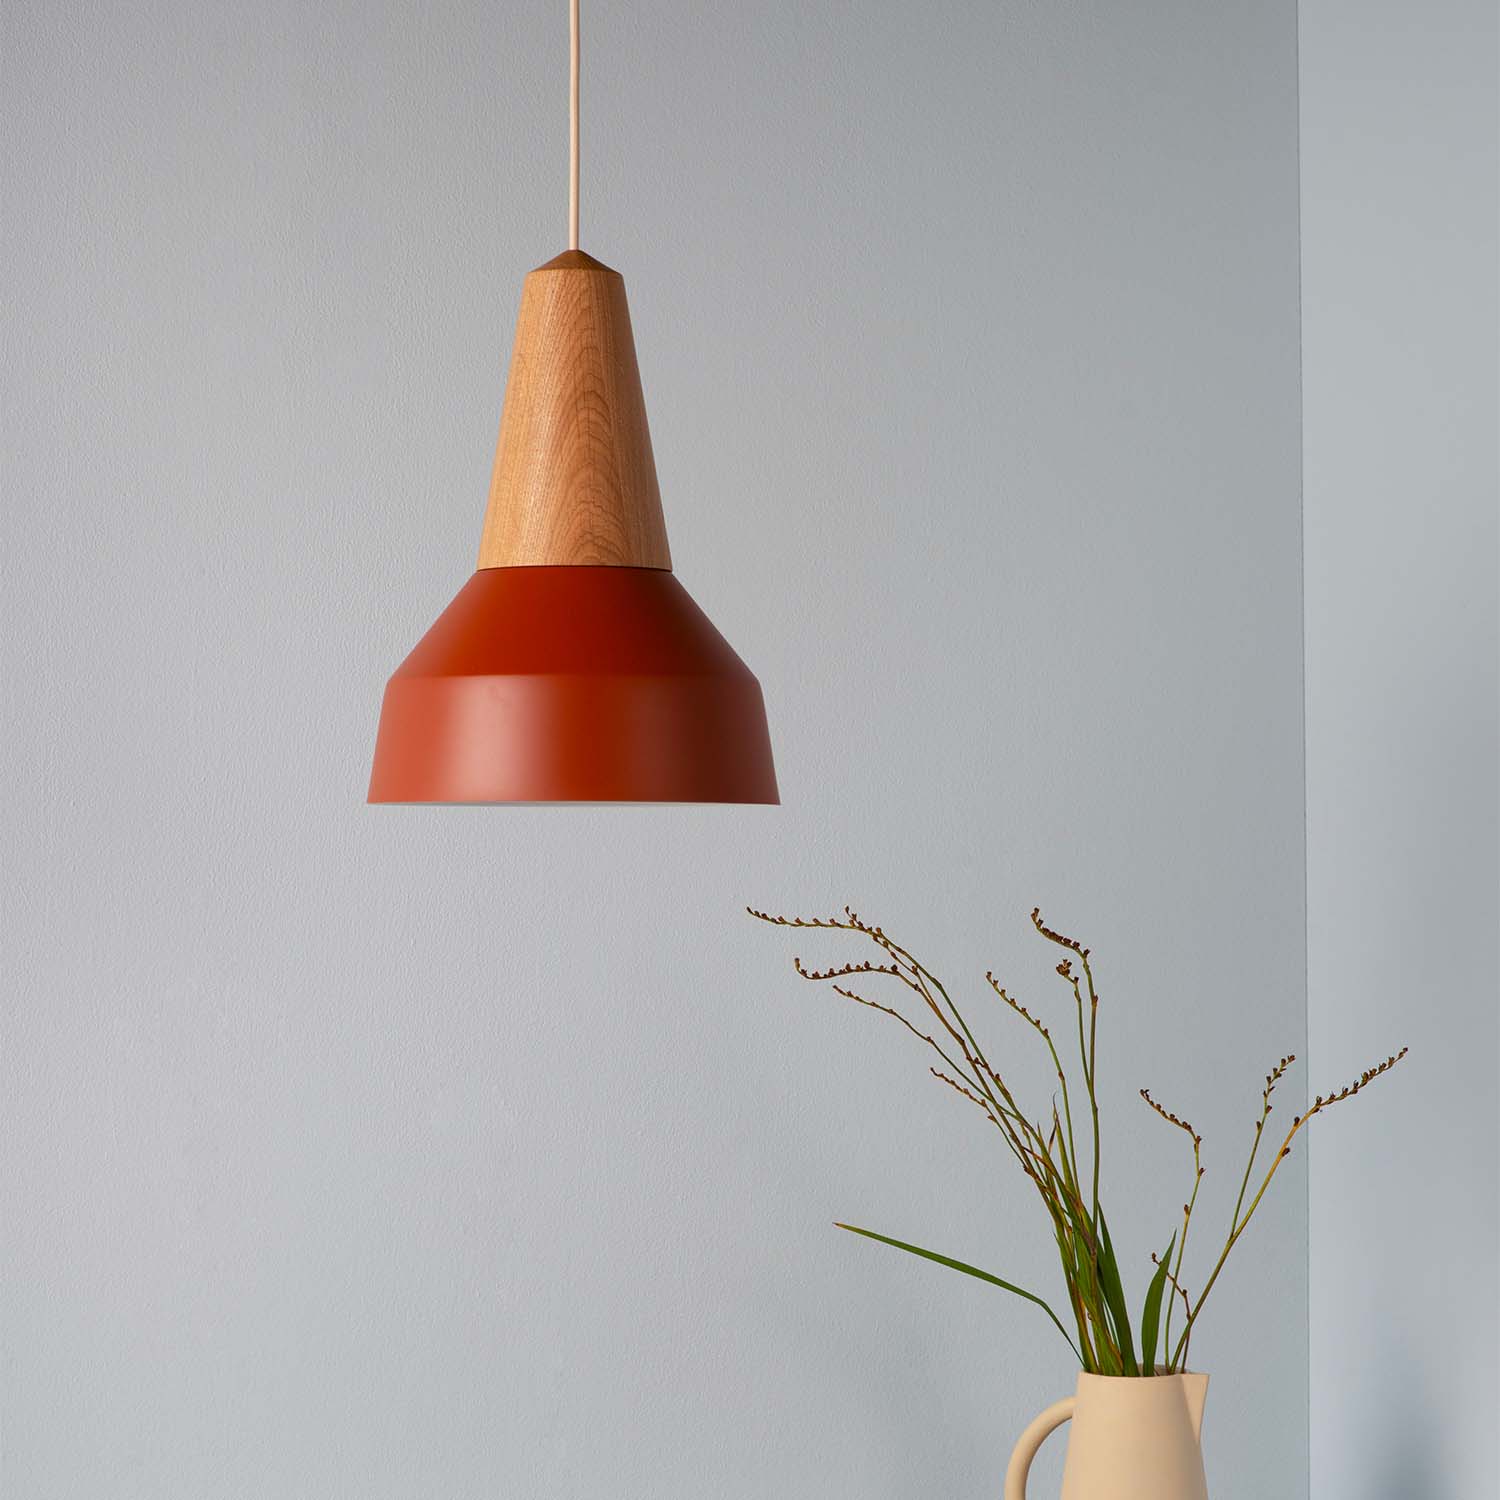 EIKON BASIC - Scandinavian conical pendant light, colorful and wood